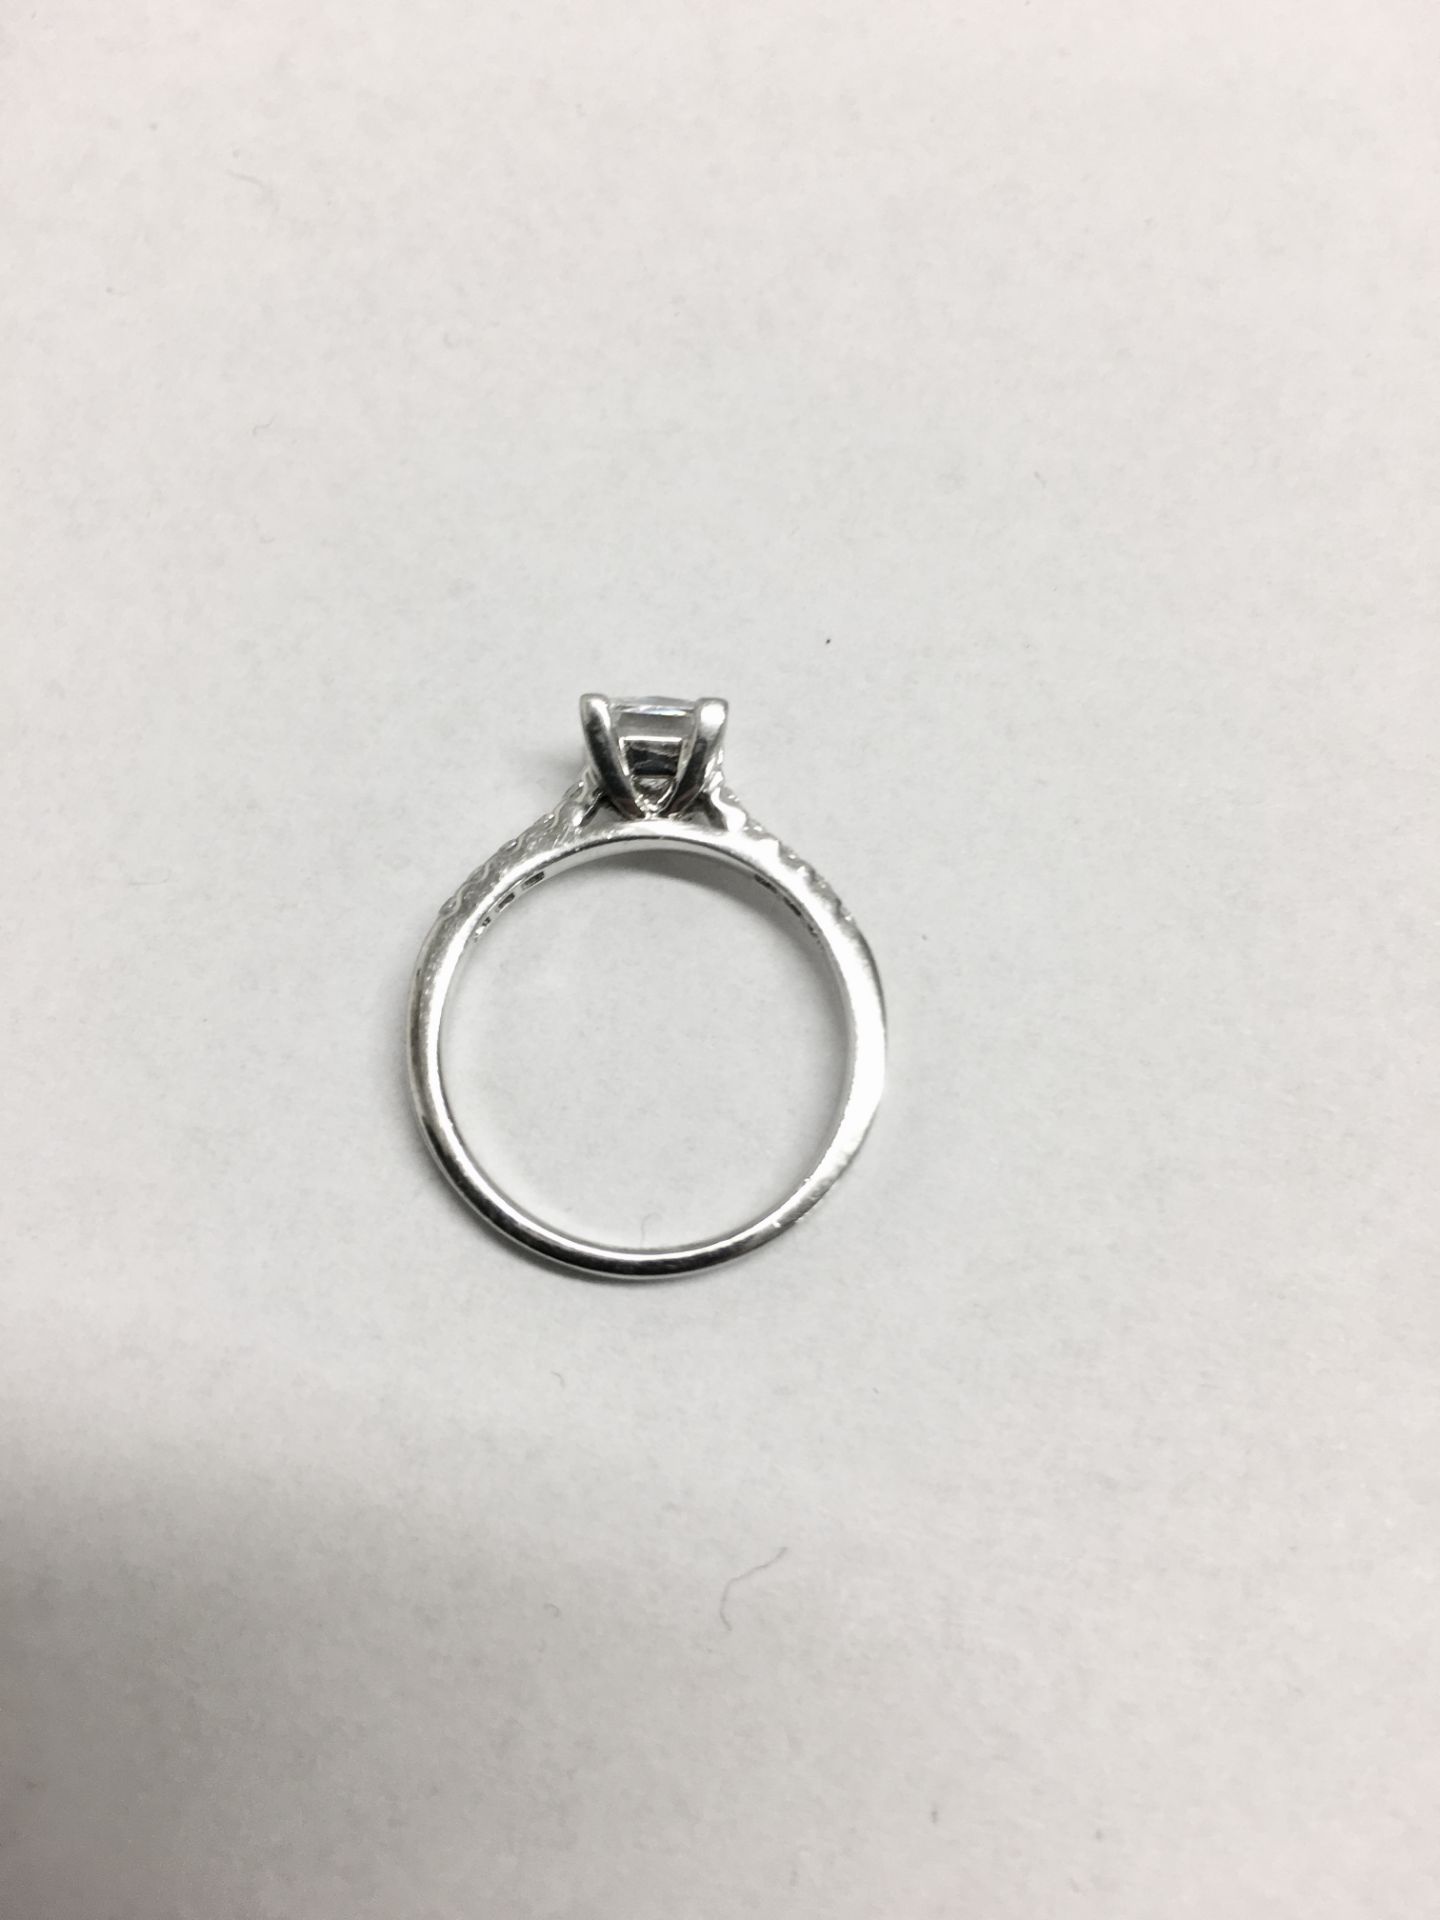 Platinum diamond solitaire ring,0.45ct princess,h colour si2 clarity,4.15gms platinum ,10 diamonds - Image 3 of 3